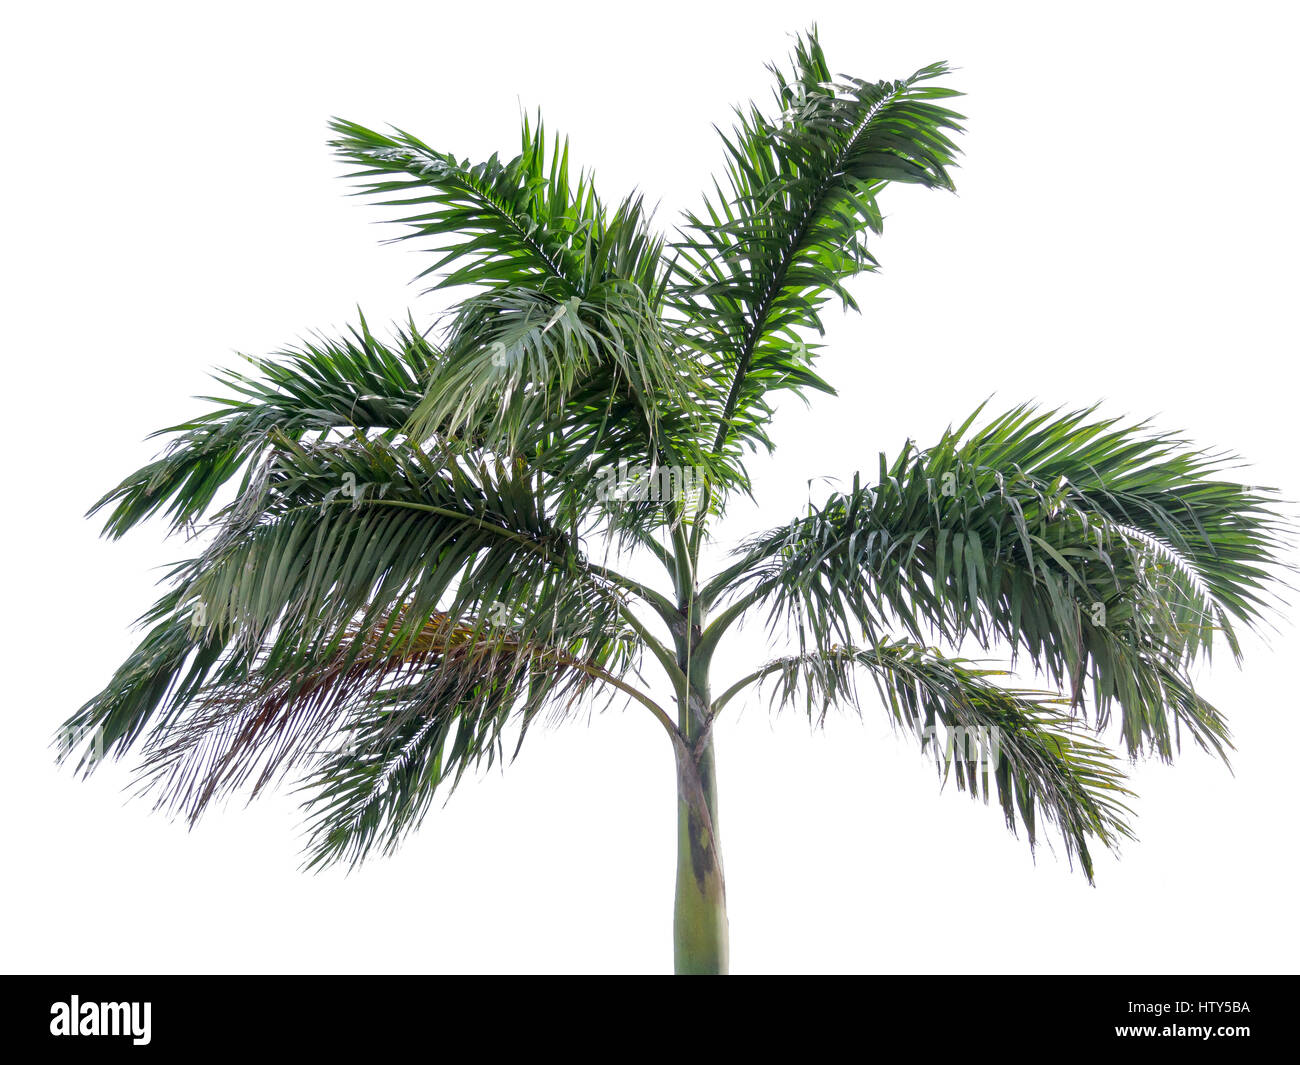 Palm tree, isolated on white background Stock Photo